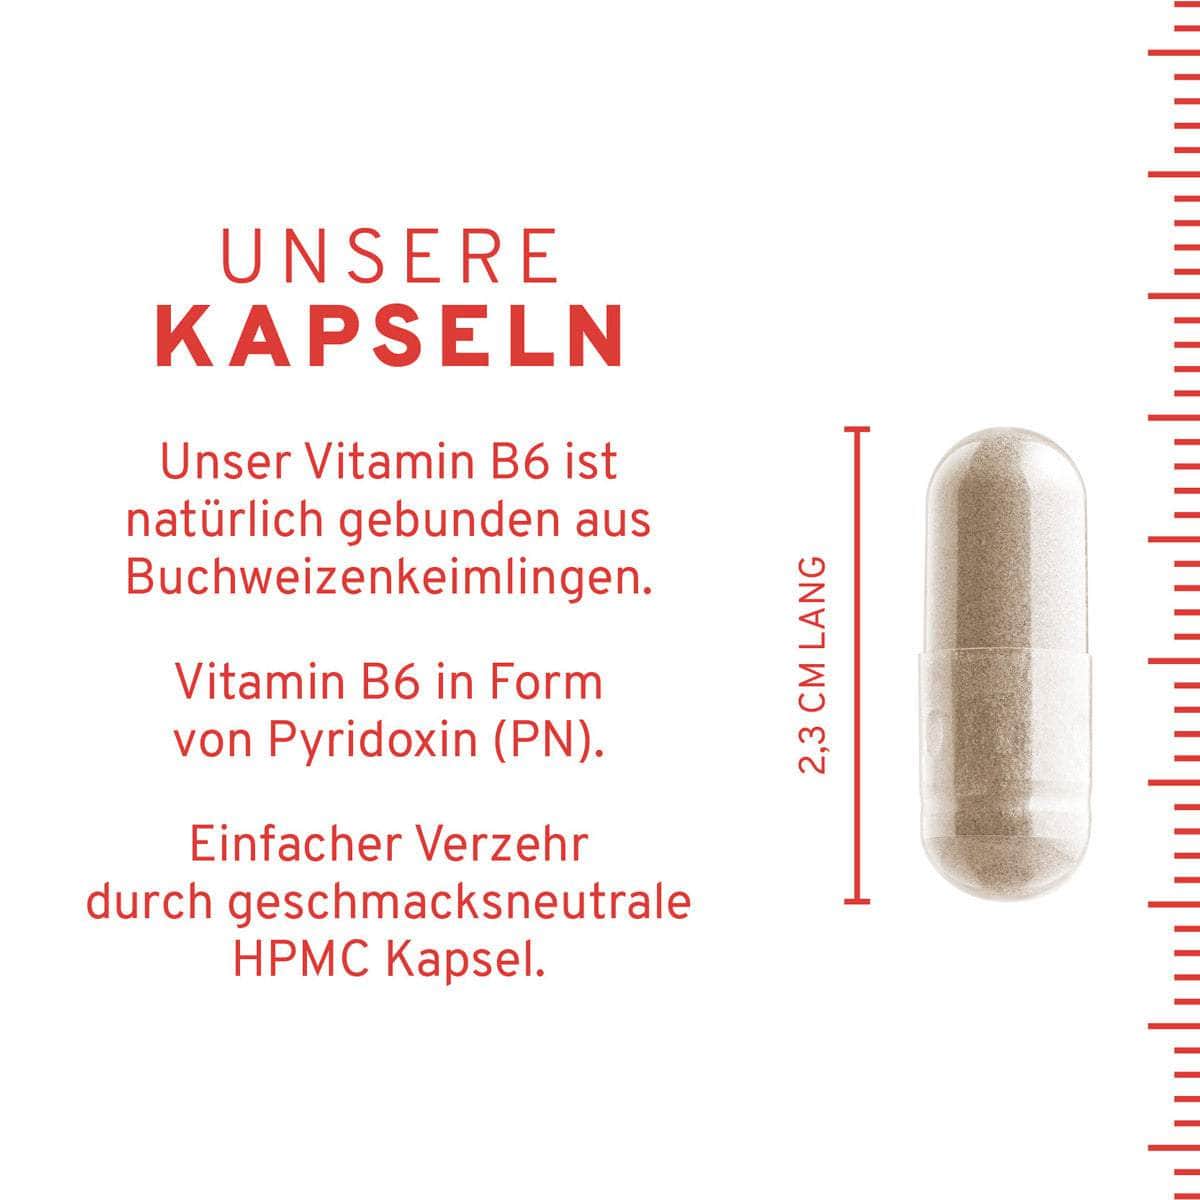 InnoNature Kapseln Vitamin B6 Kapseln: Buchweizen Keimlinge